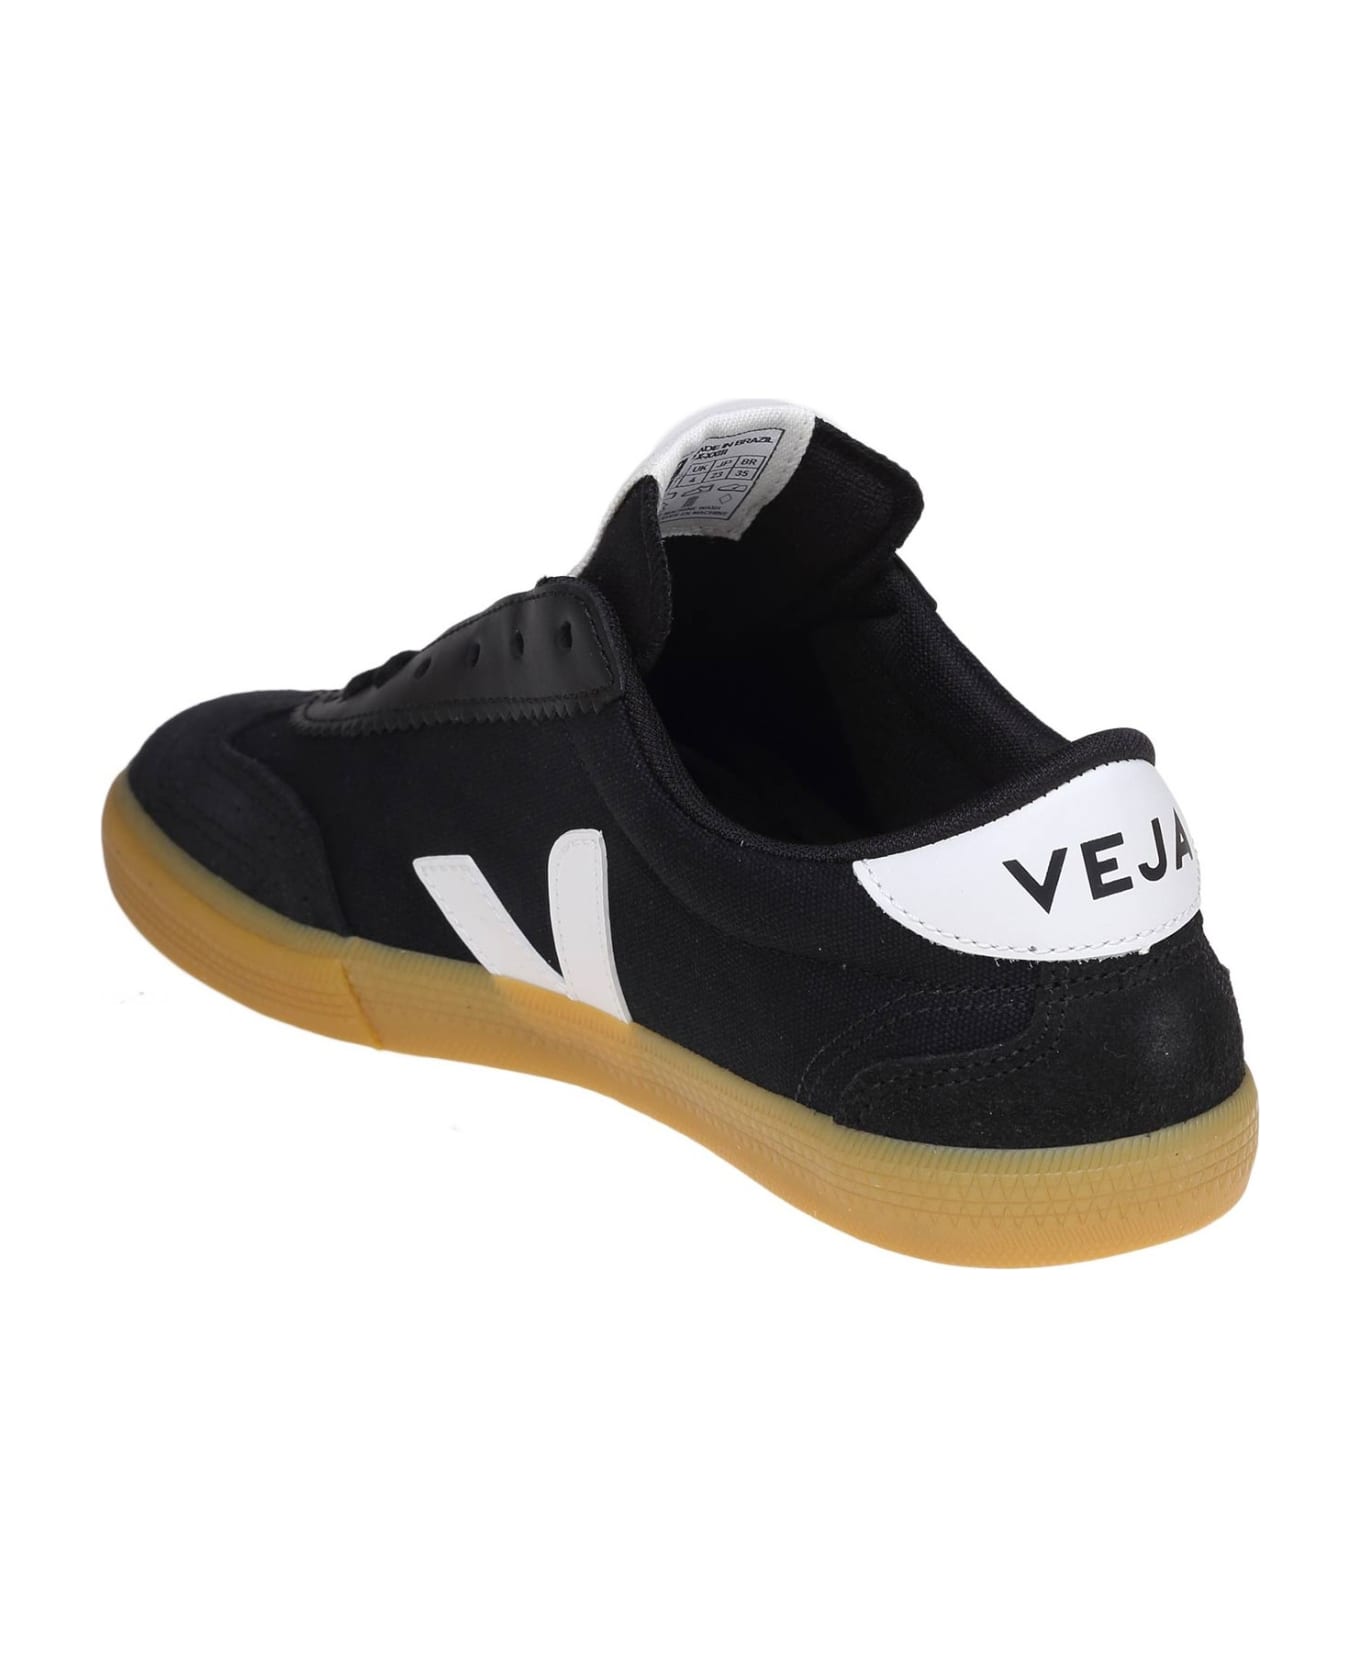 Veja Volley Sneakers In Black Canvas - Black/White スニーカー